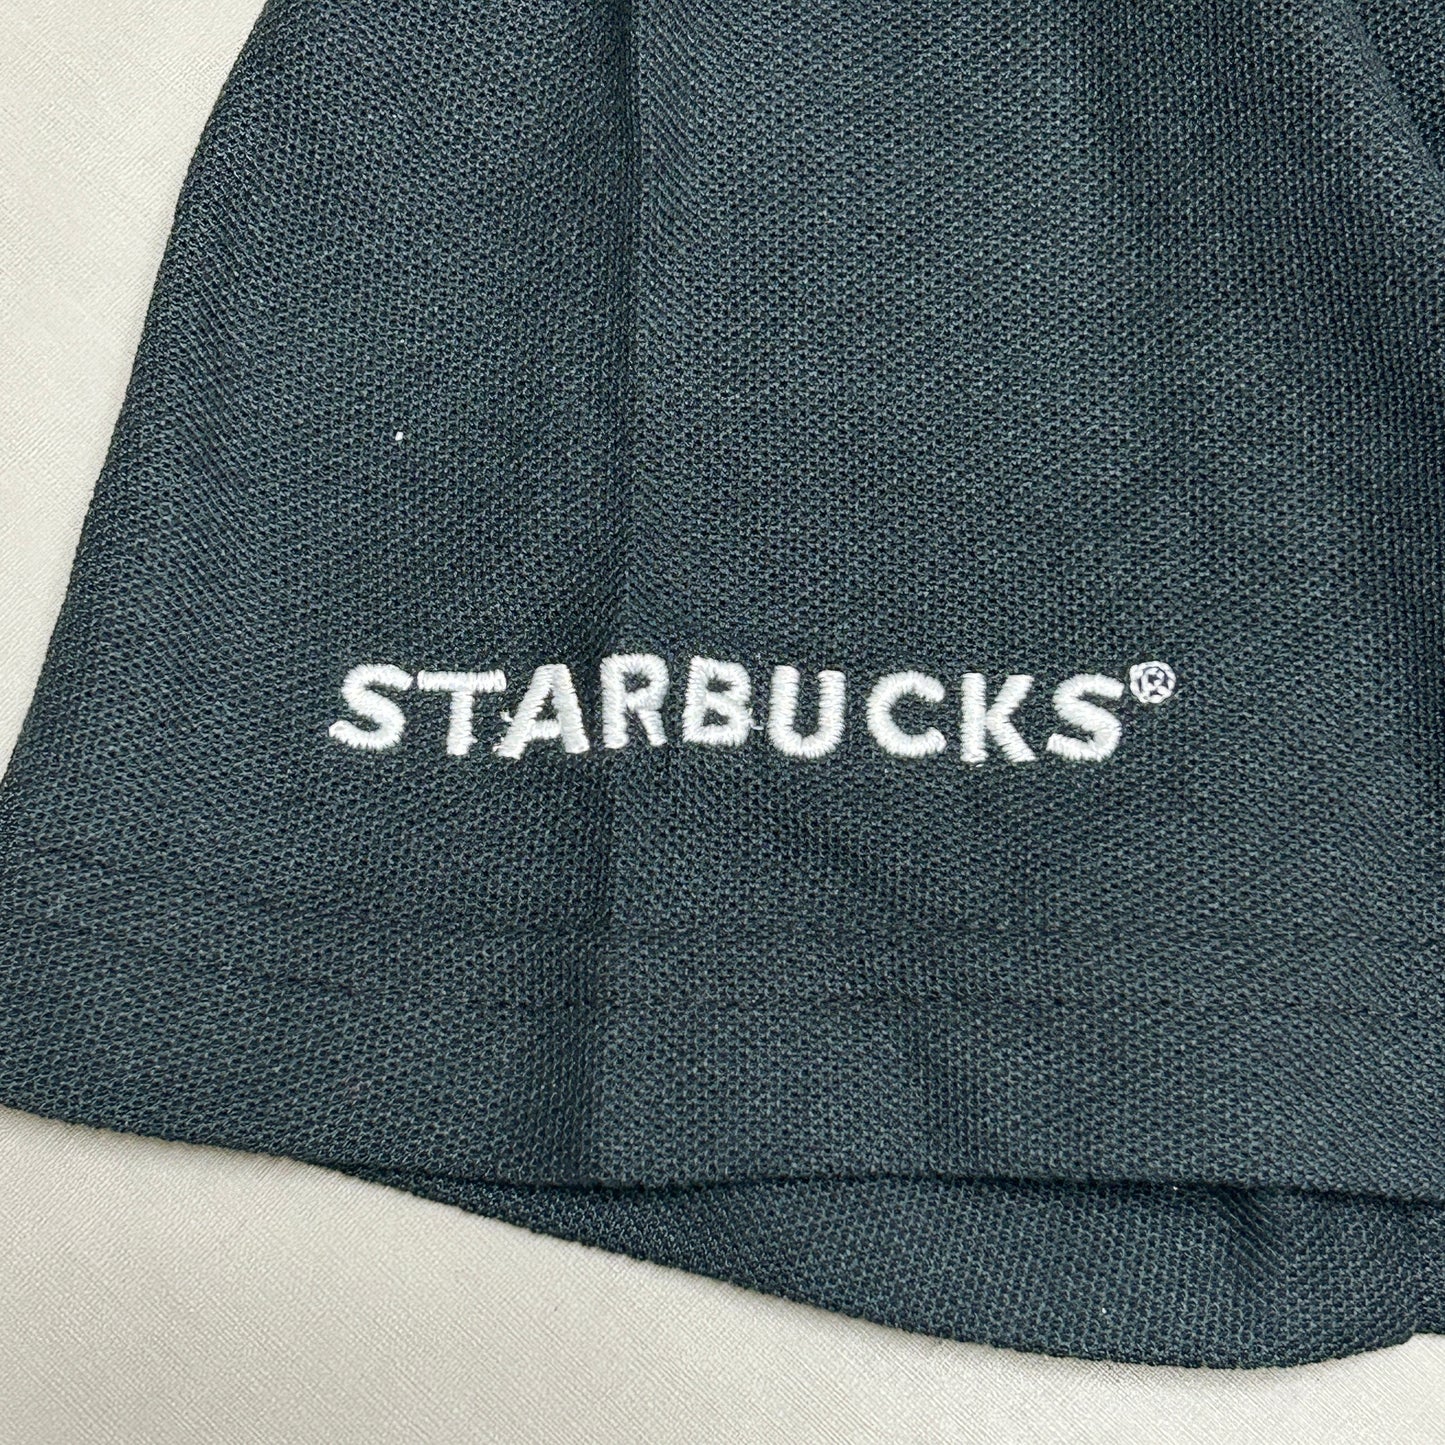 STARBUCKS Embroidered Employee T-Shirt Work Polo Uniform Unisex Sz XL Black (New)